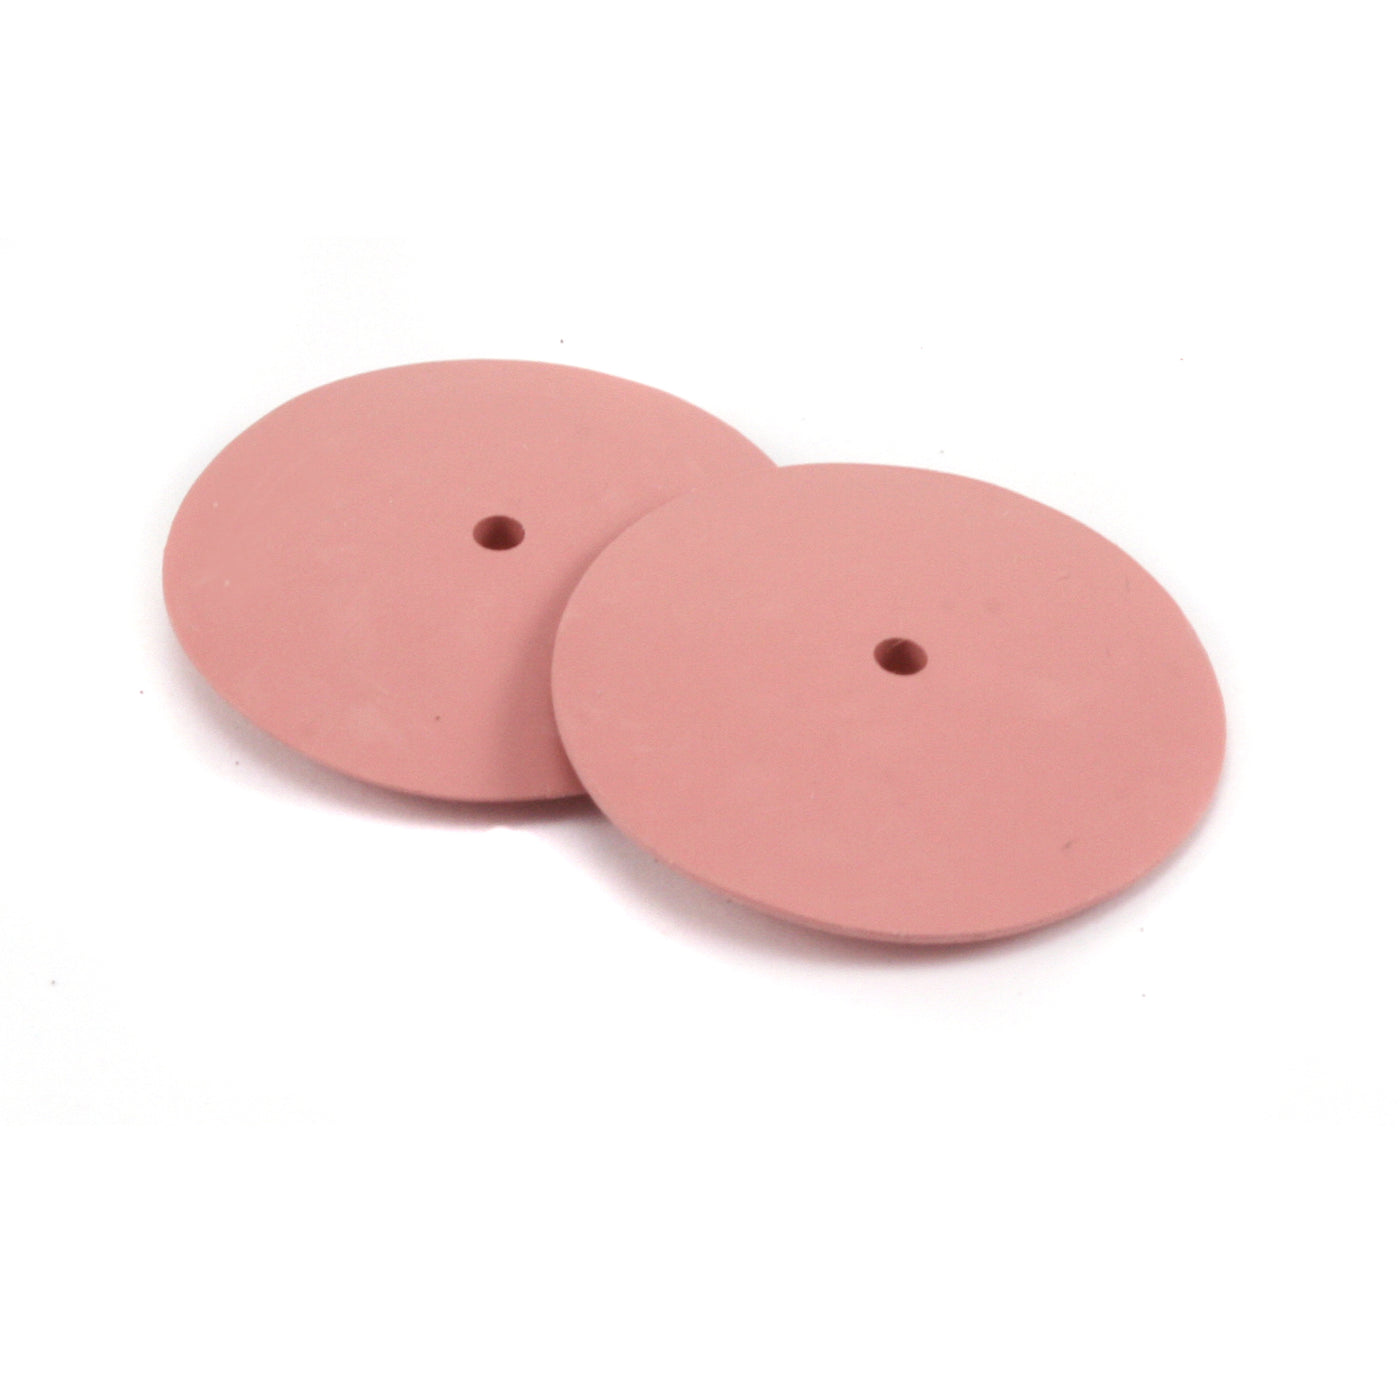 Silicone Polishing Wheel, Knife Edge - Pink 7/8 Extra Fine, Pack of 2